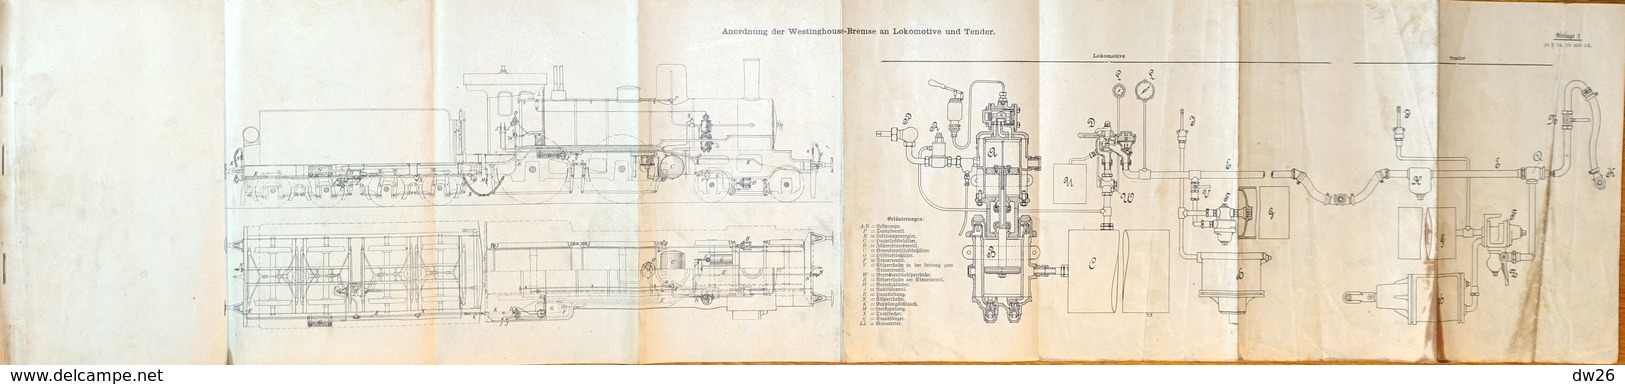 Planches Techniques Train (locomotives): Anordnung Der Westinghouse-Bremse And Lokomotive Und Tender - Tecnica